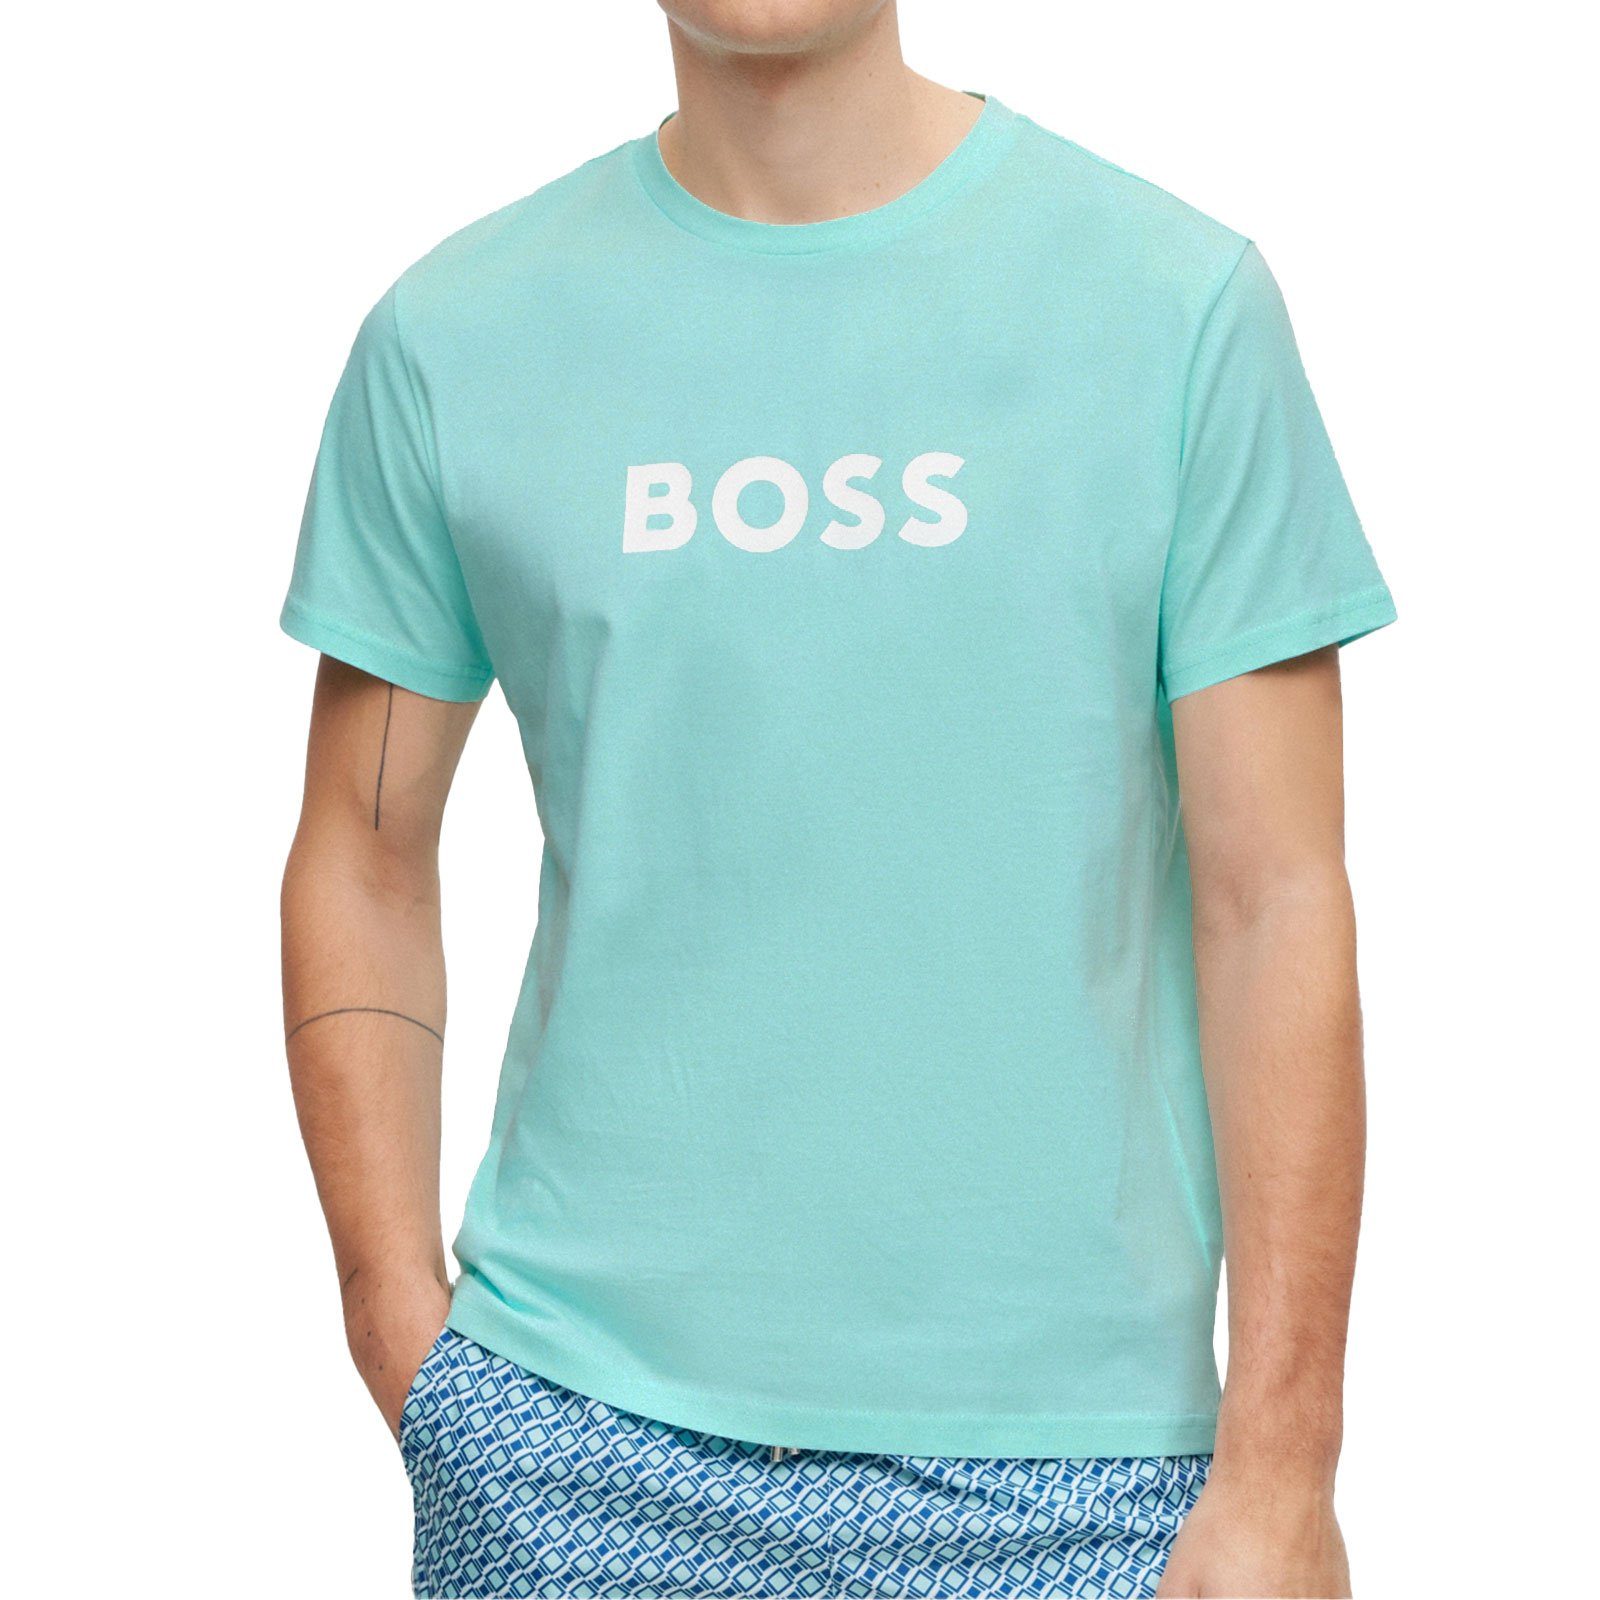 Brust BOSS T-Shirt T-Shirt open 356 Markenprint green großem der mit RN auf